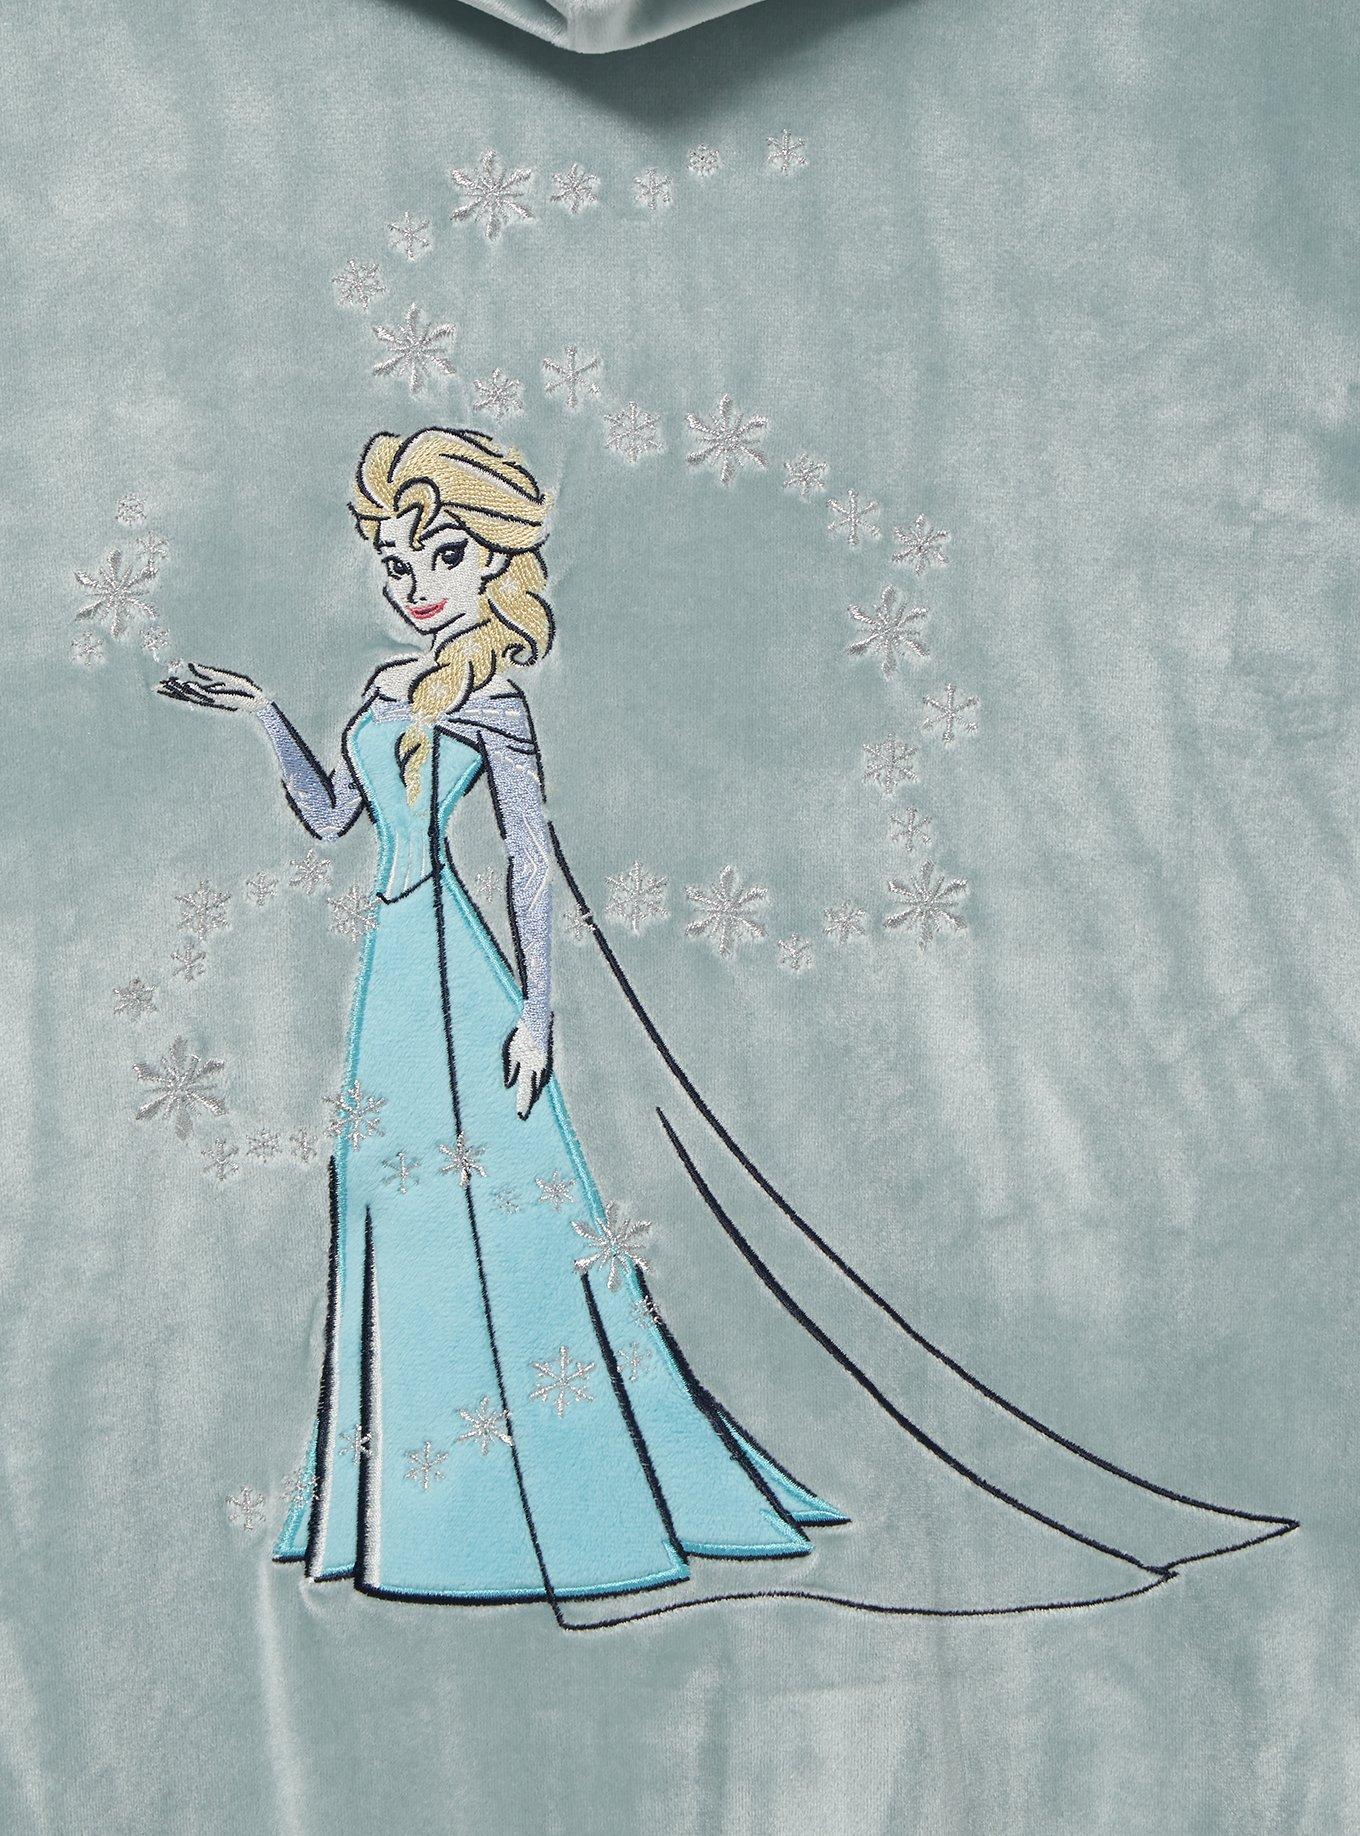 Disney Frozen Elsa Portrait Zip-Up Hoodie Plus Size, HYDRO TEAL, alternate